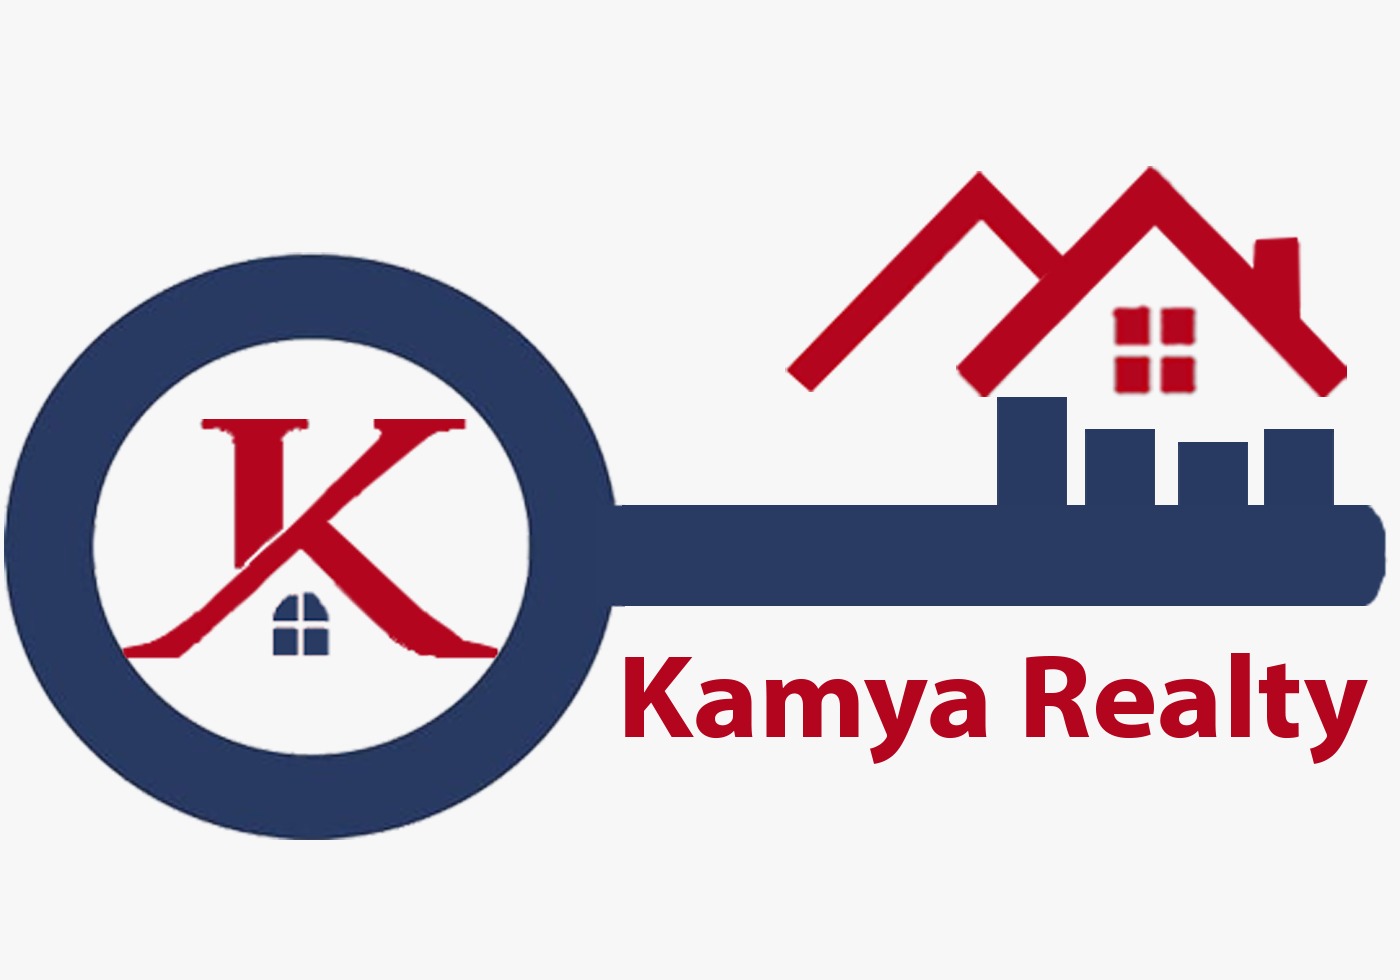 Kamya Realty business details